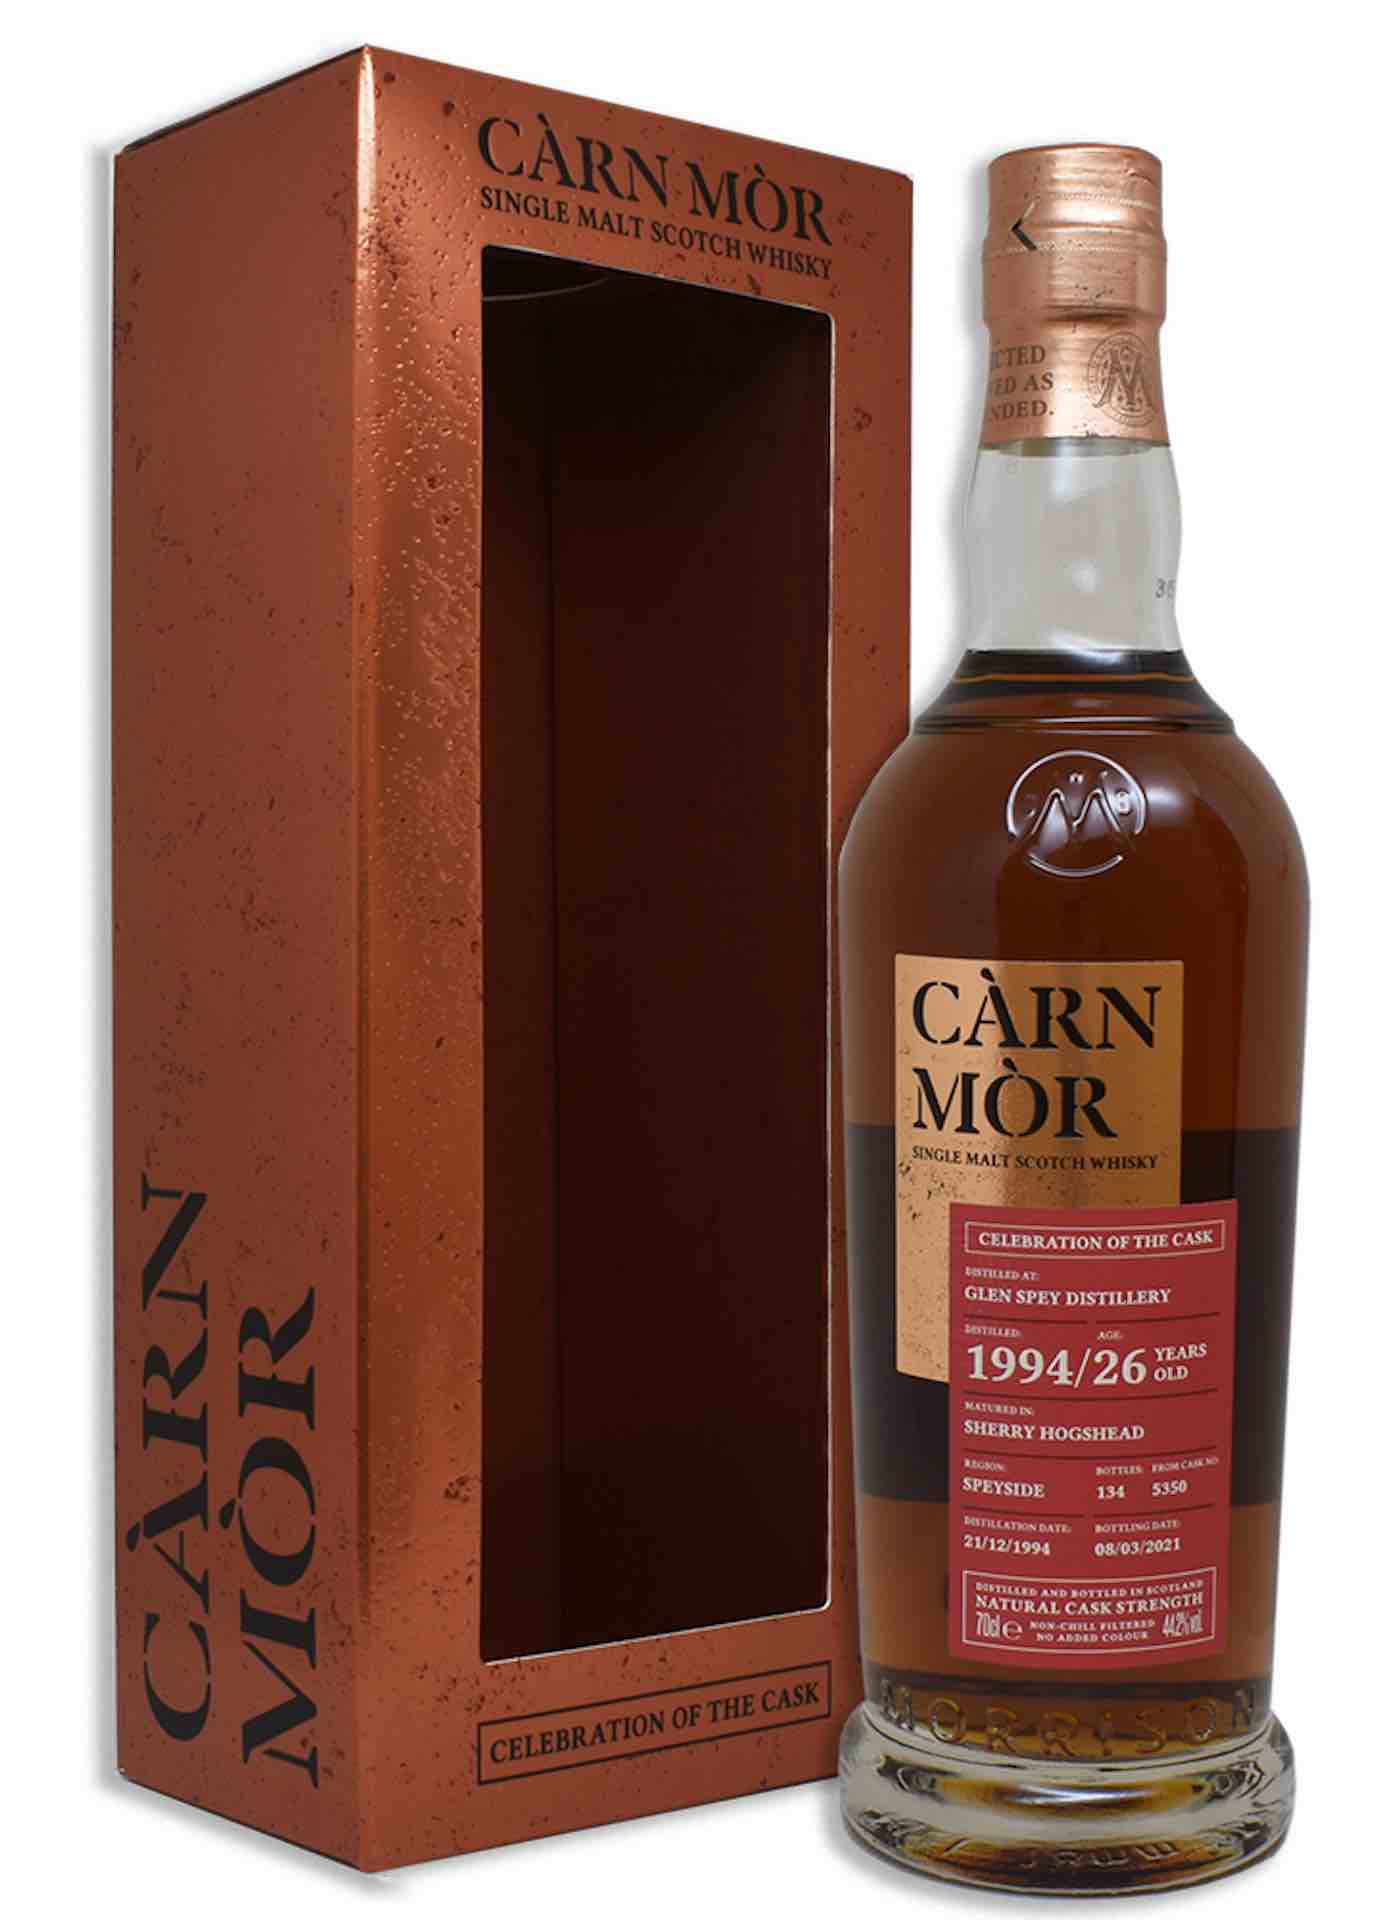 Càrn Mòr Glen Spey 1994 Sherry Hogshead single cask malt scotch whisky